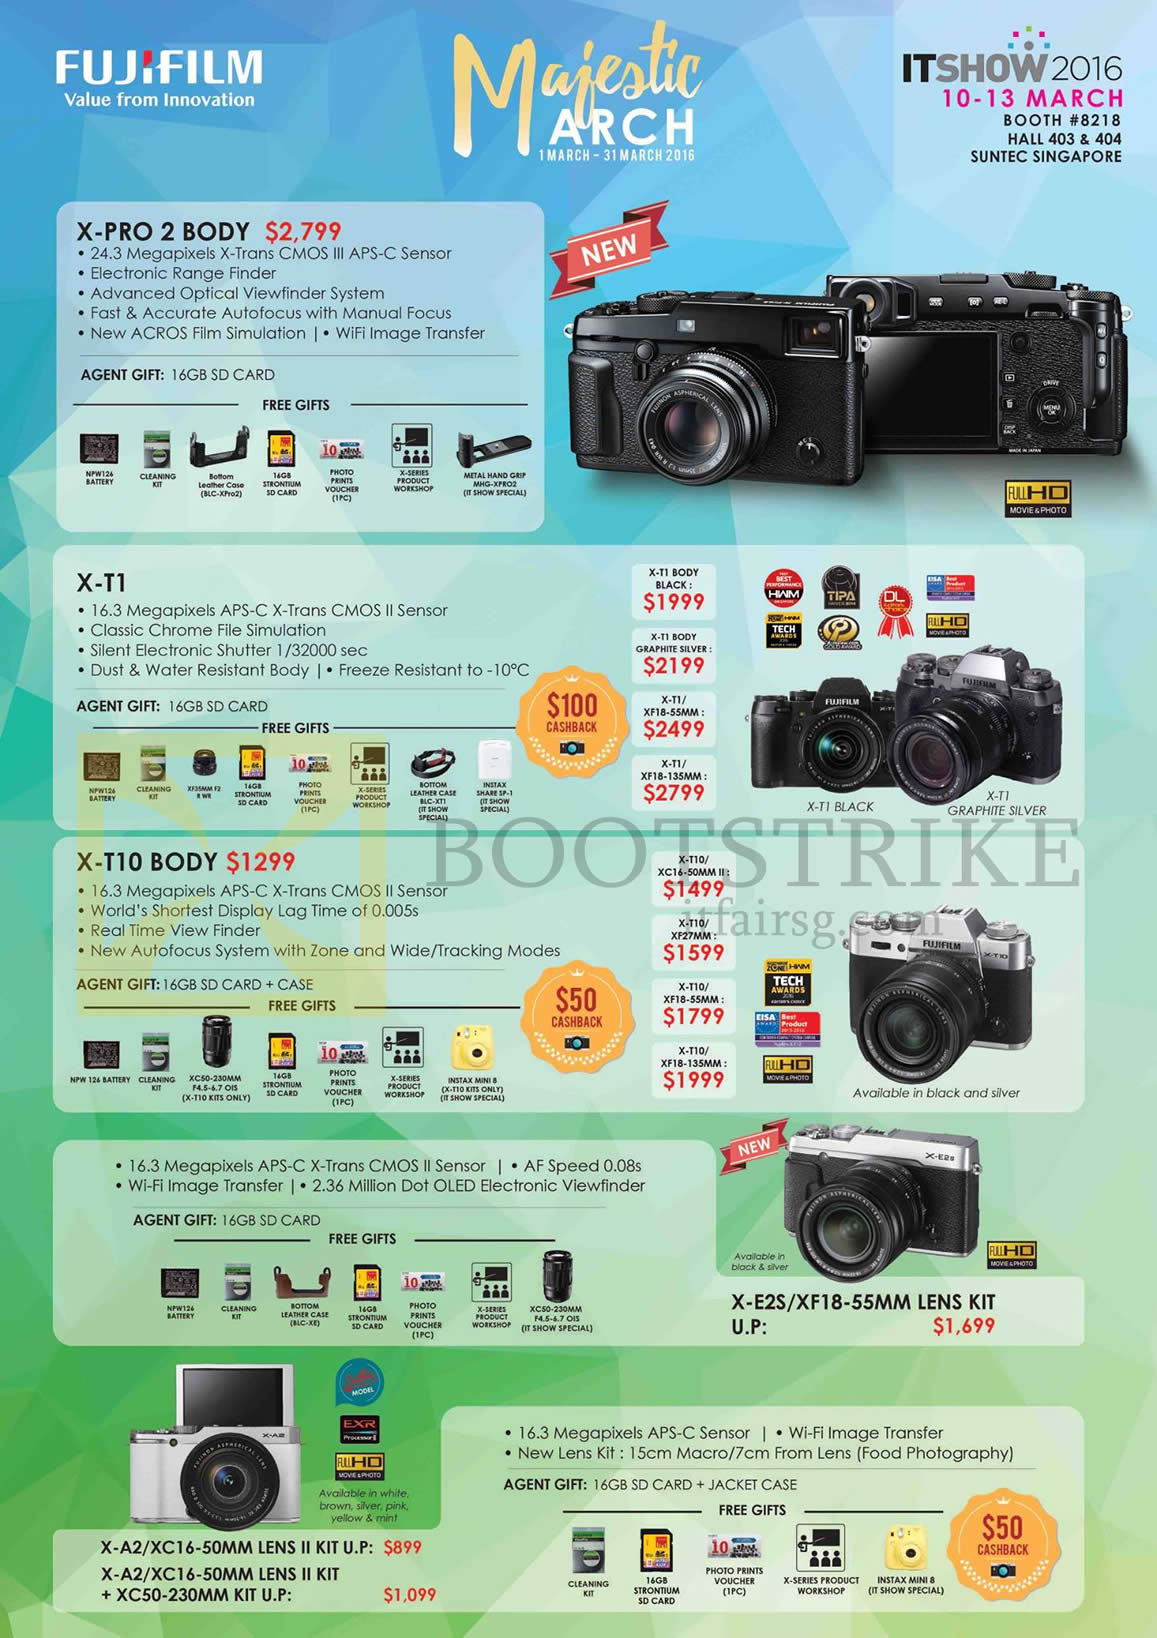 IT SHOW 2016 price list image brochure of Fujifilm Digital Cameras X-PRO 2, X-T1, X-T10 Body, X-E2S, X-A2